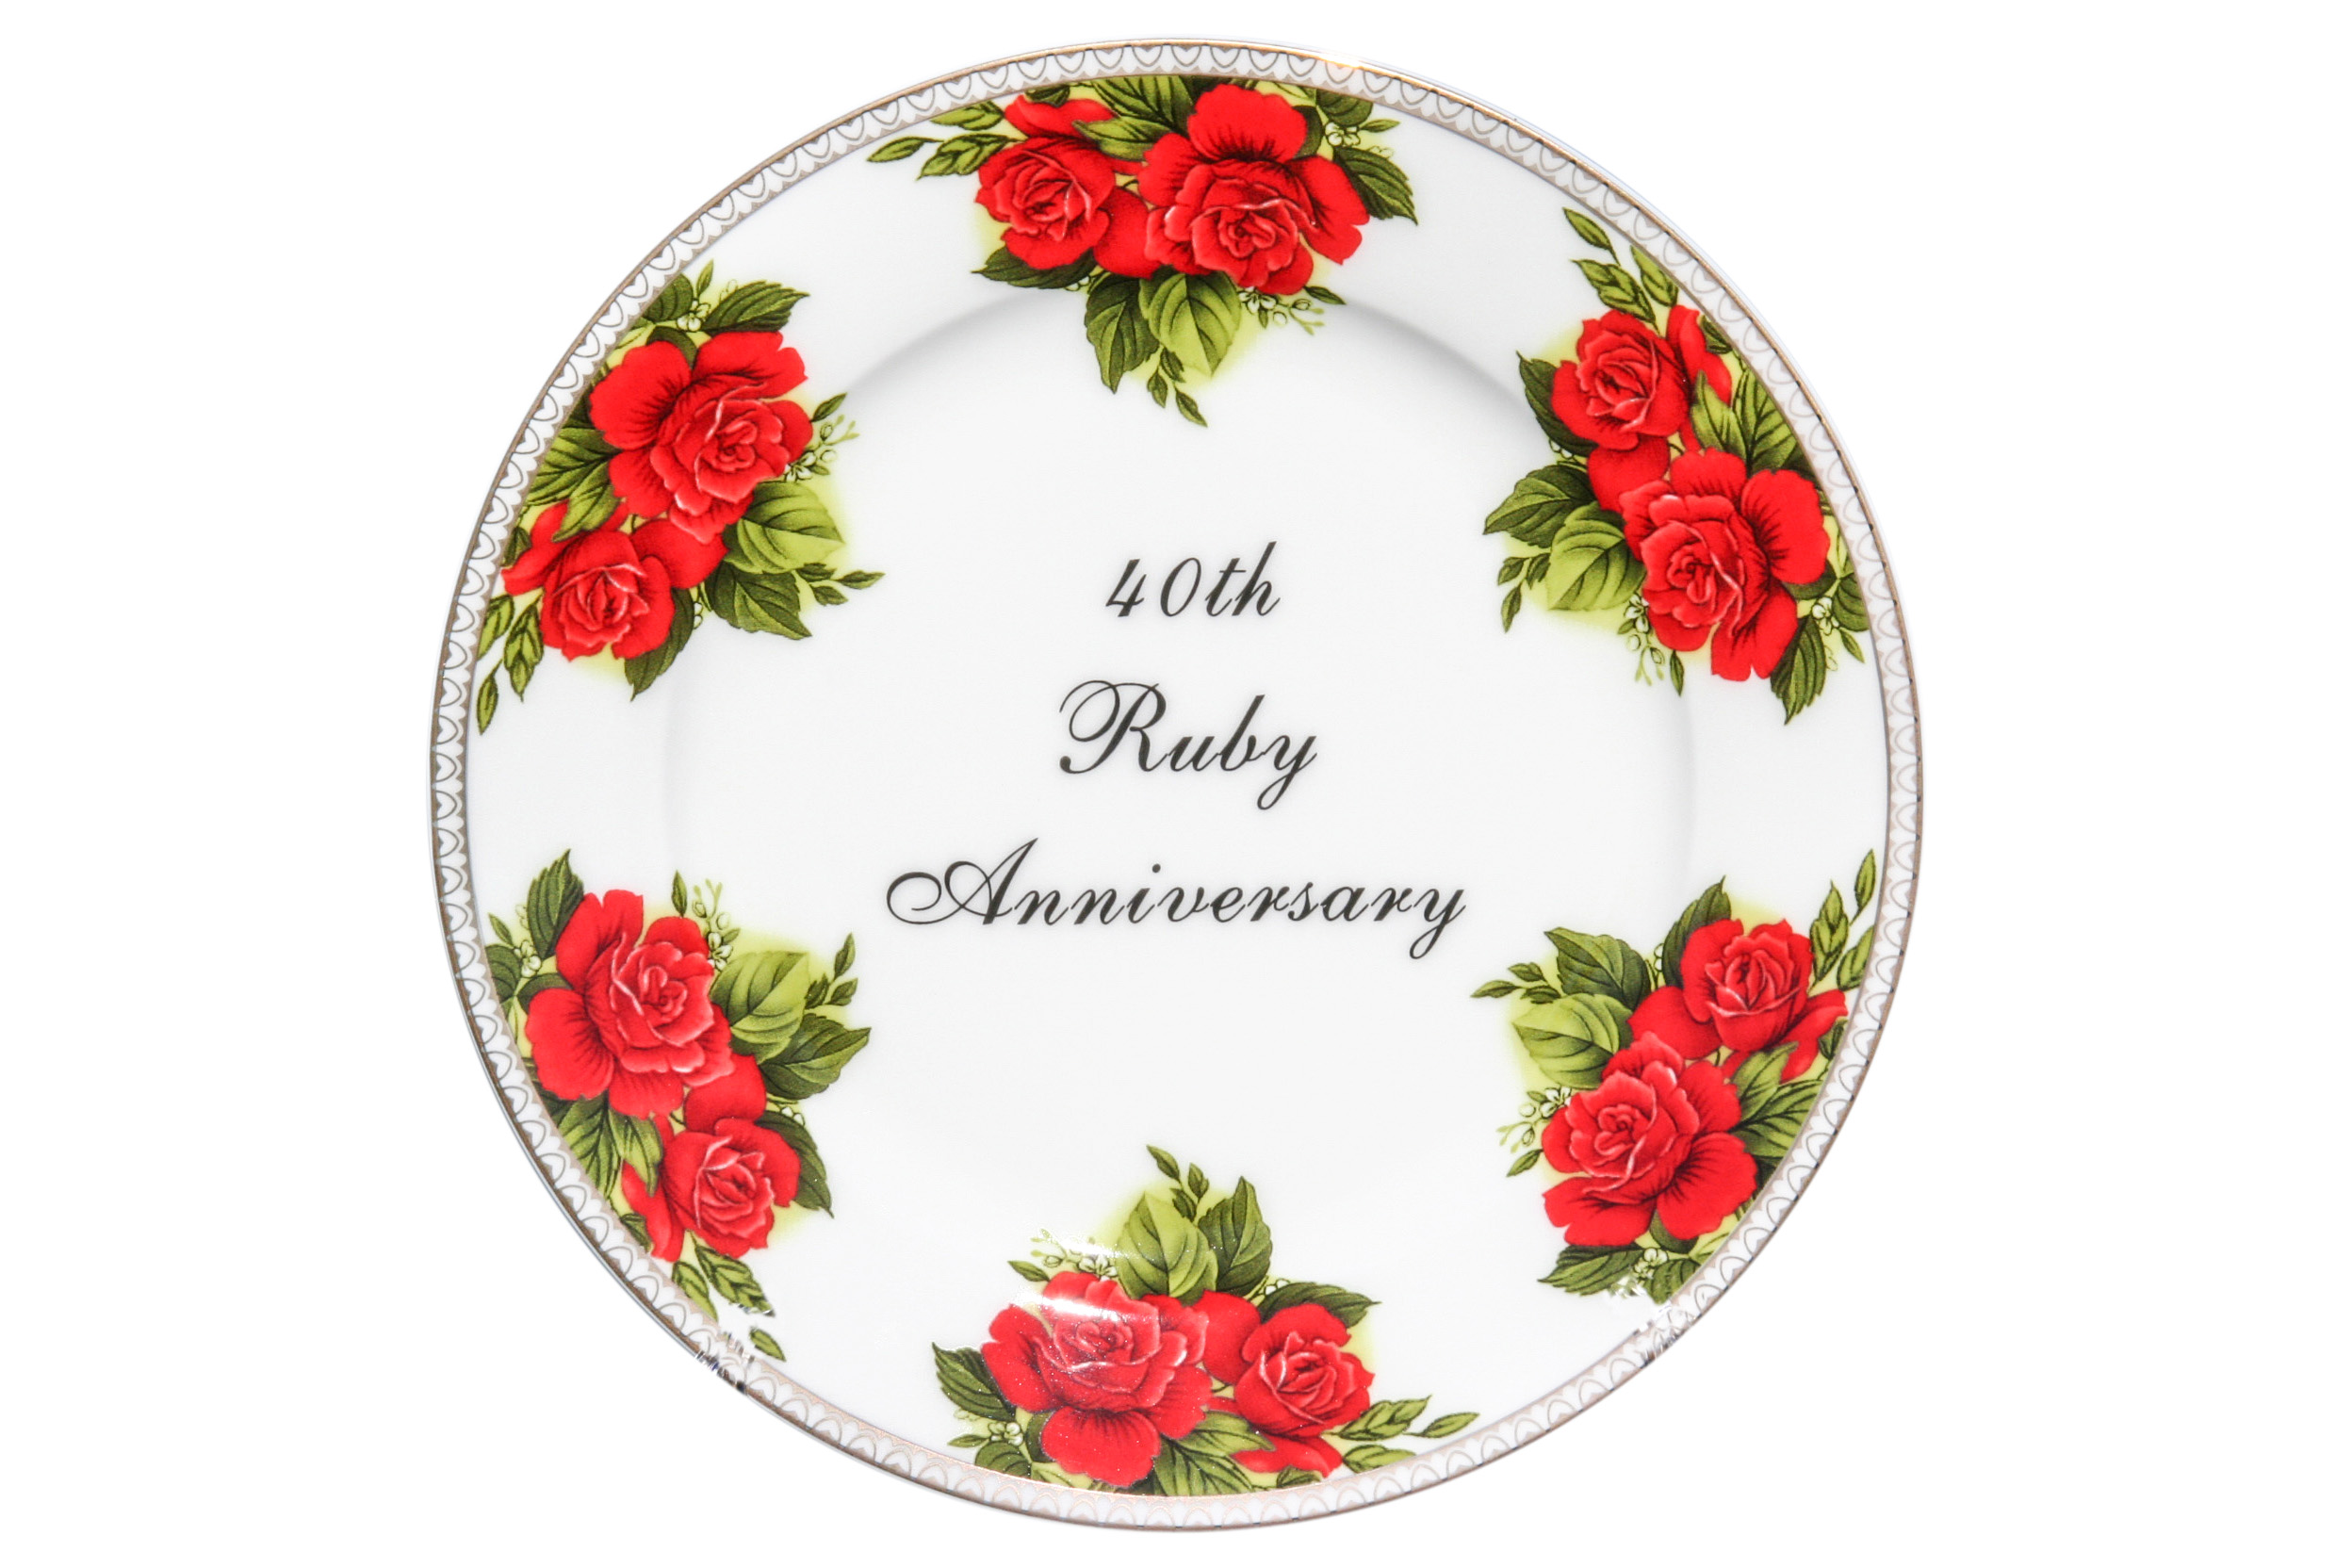 40th Ruby Anniversary Display Plate